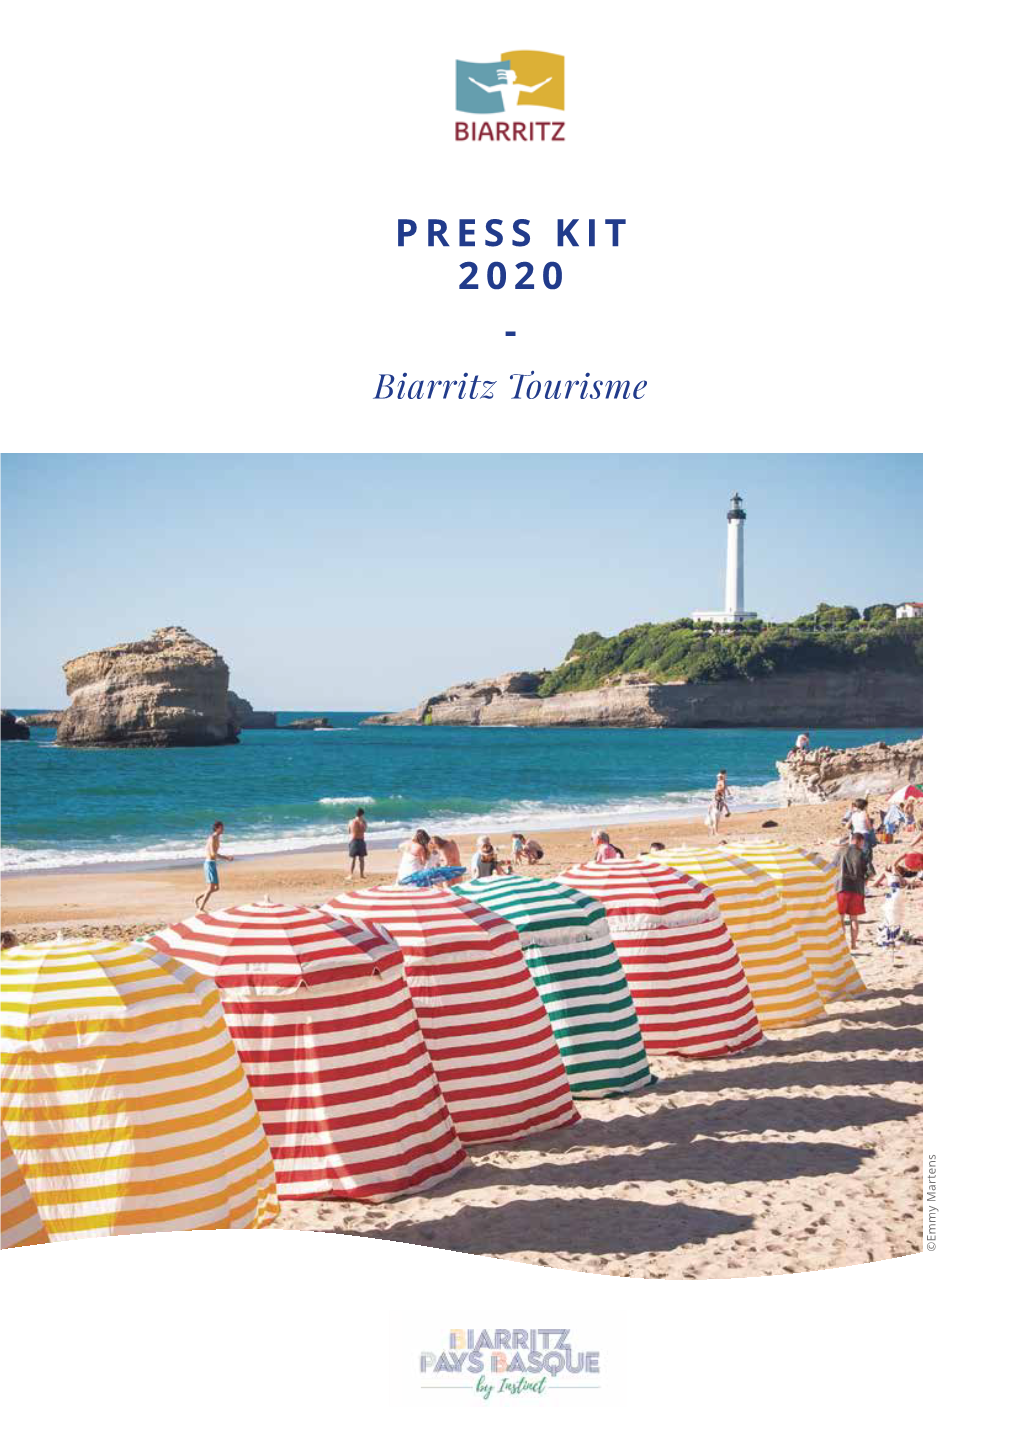 PRESS KIT 2020 - Biarritz Tourisme ©Emmy Martens Overview